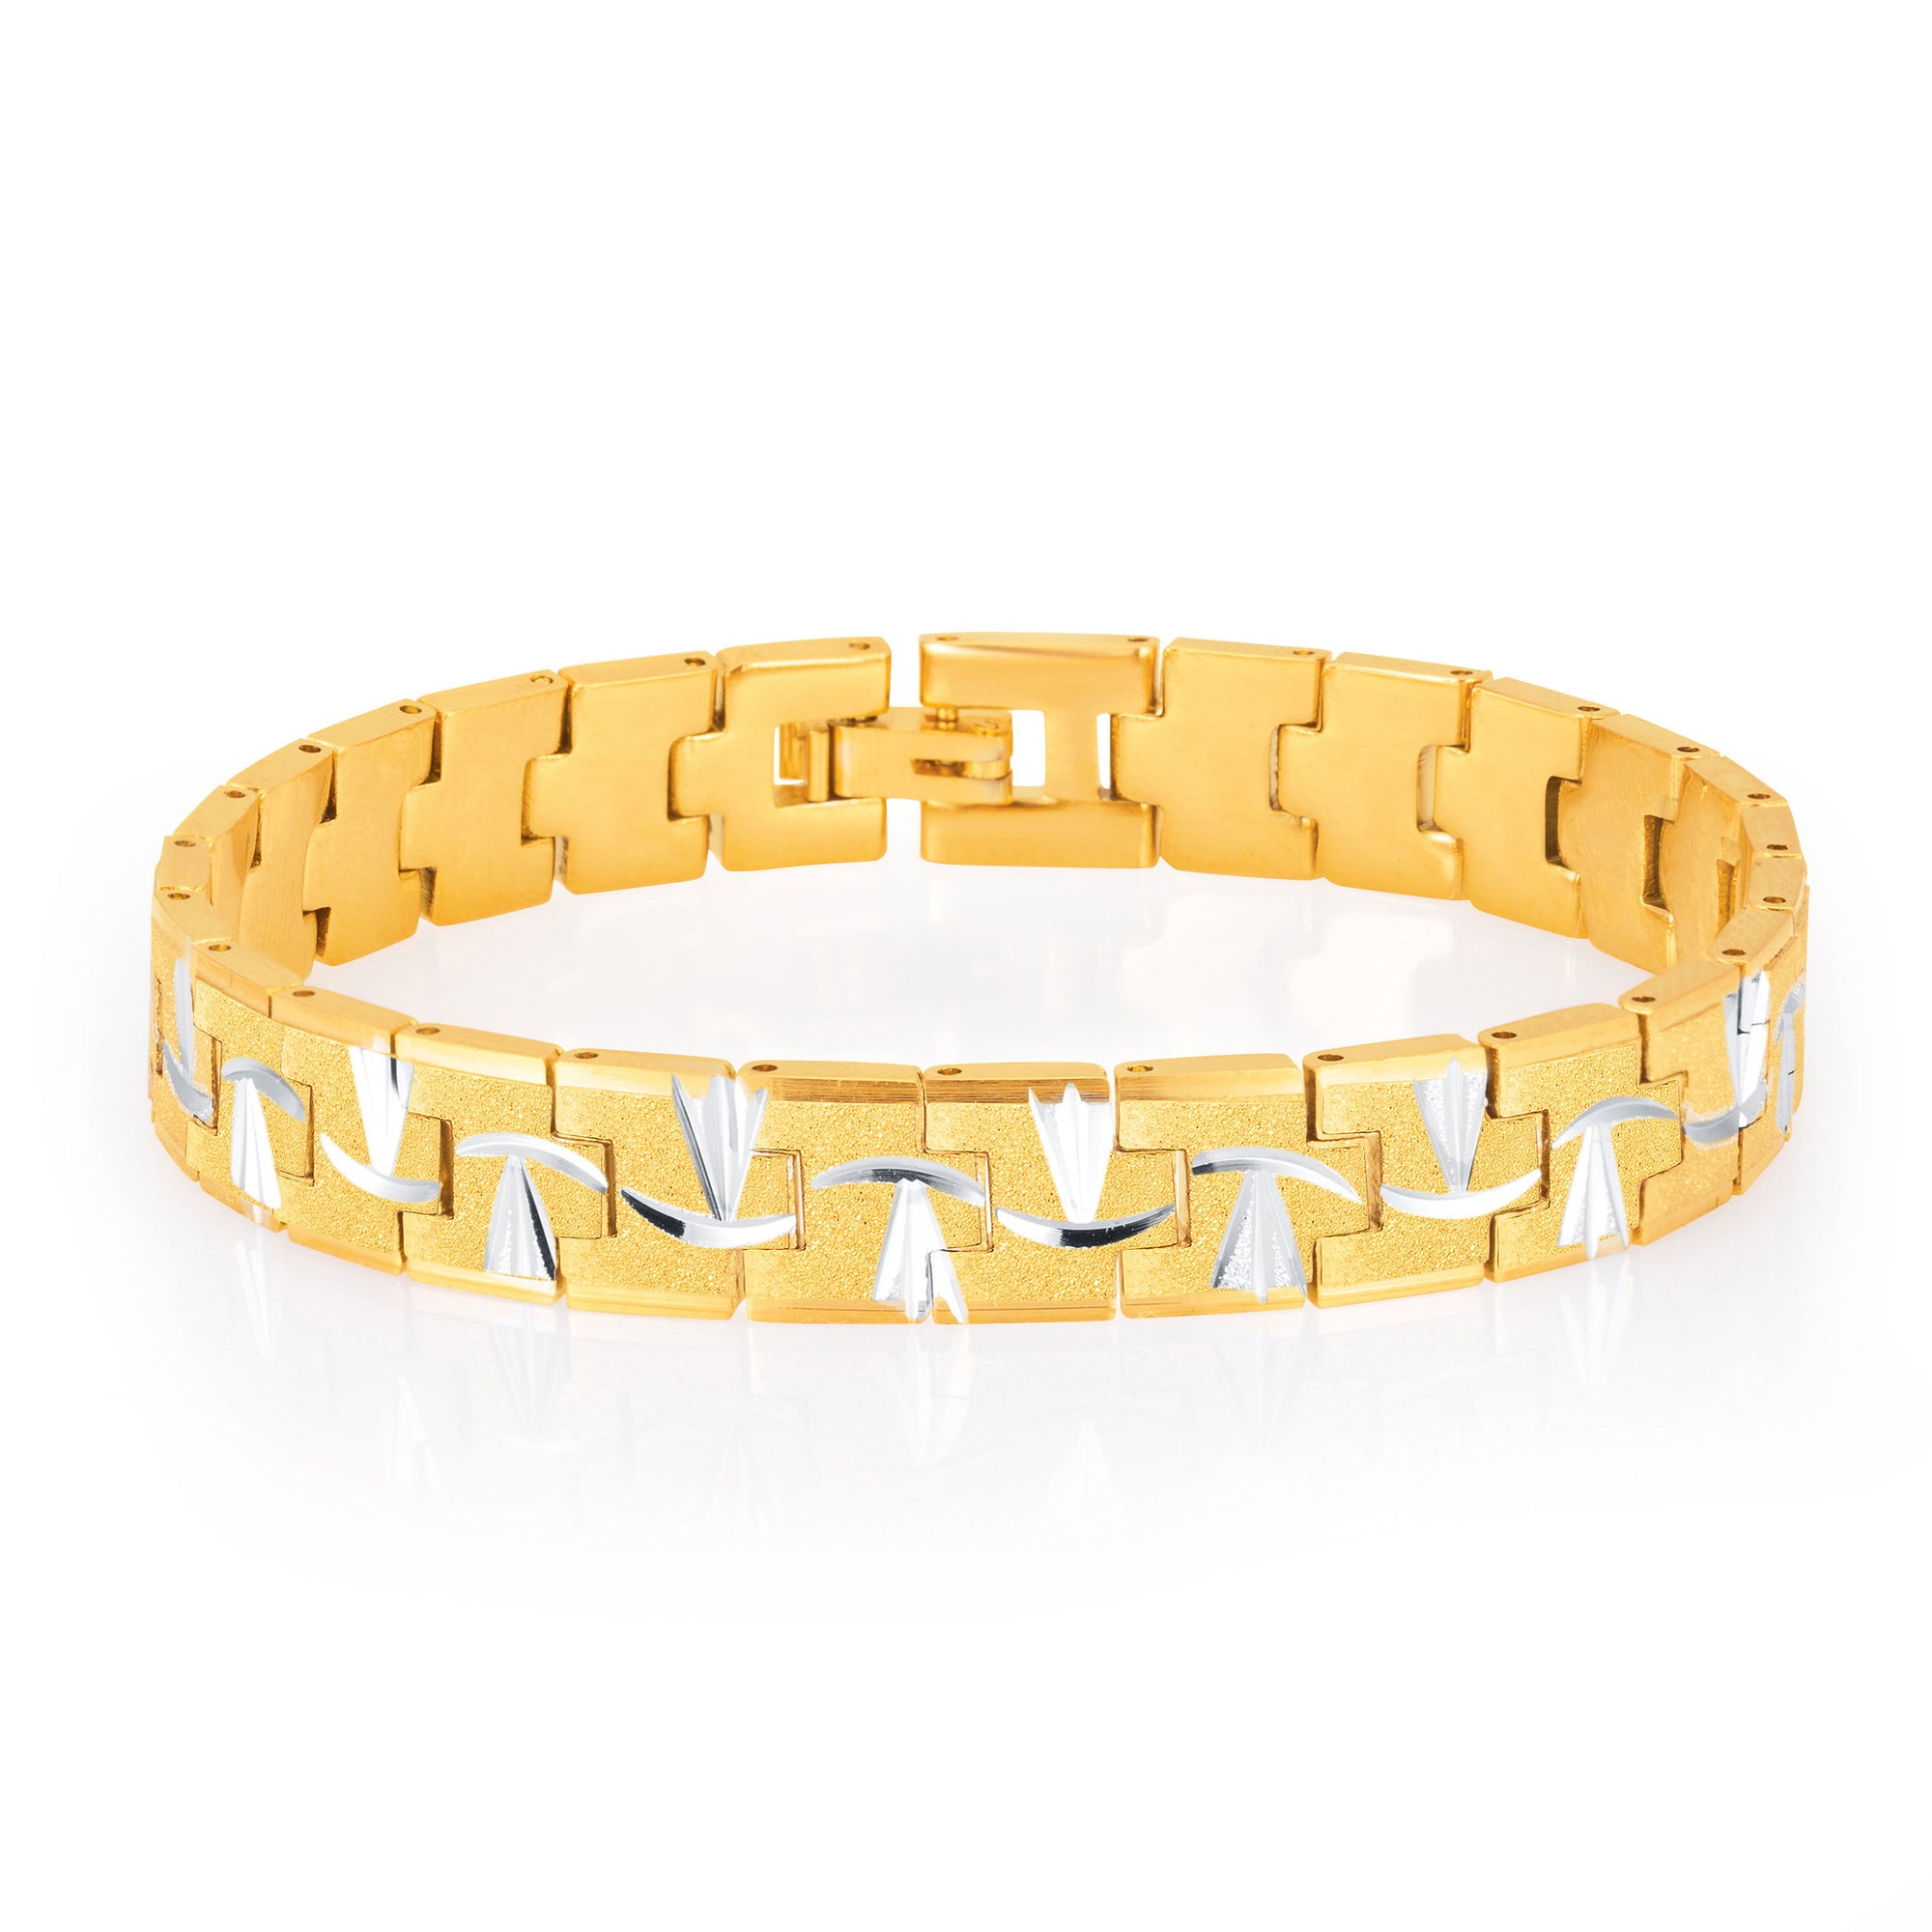 Make a men's 18k gold bracelet | Jewelry Making - YouTube